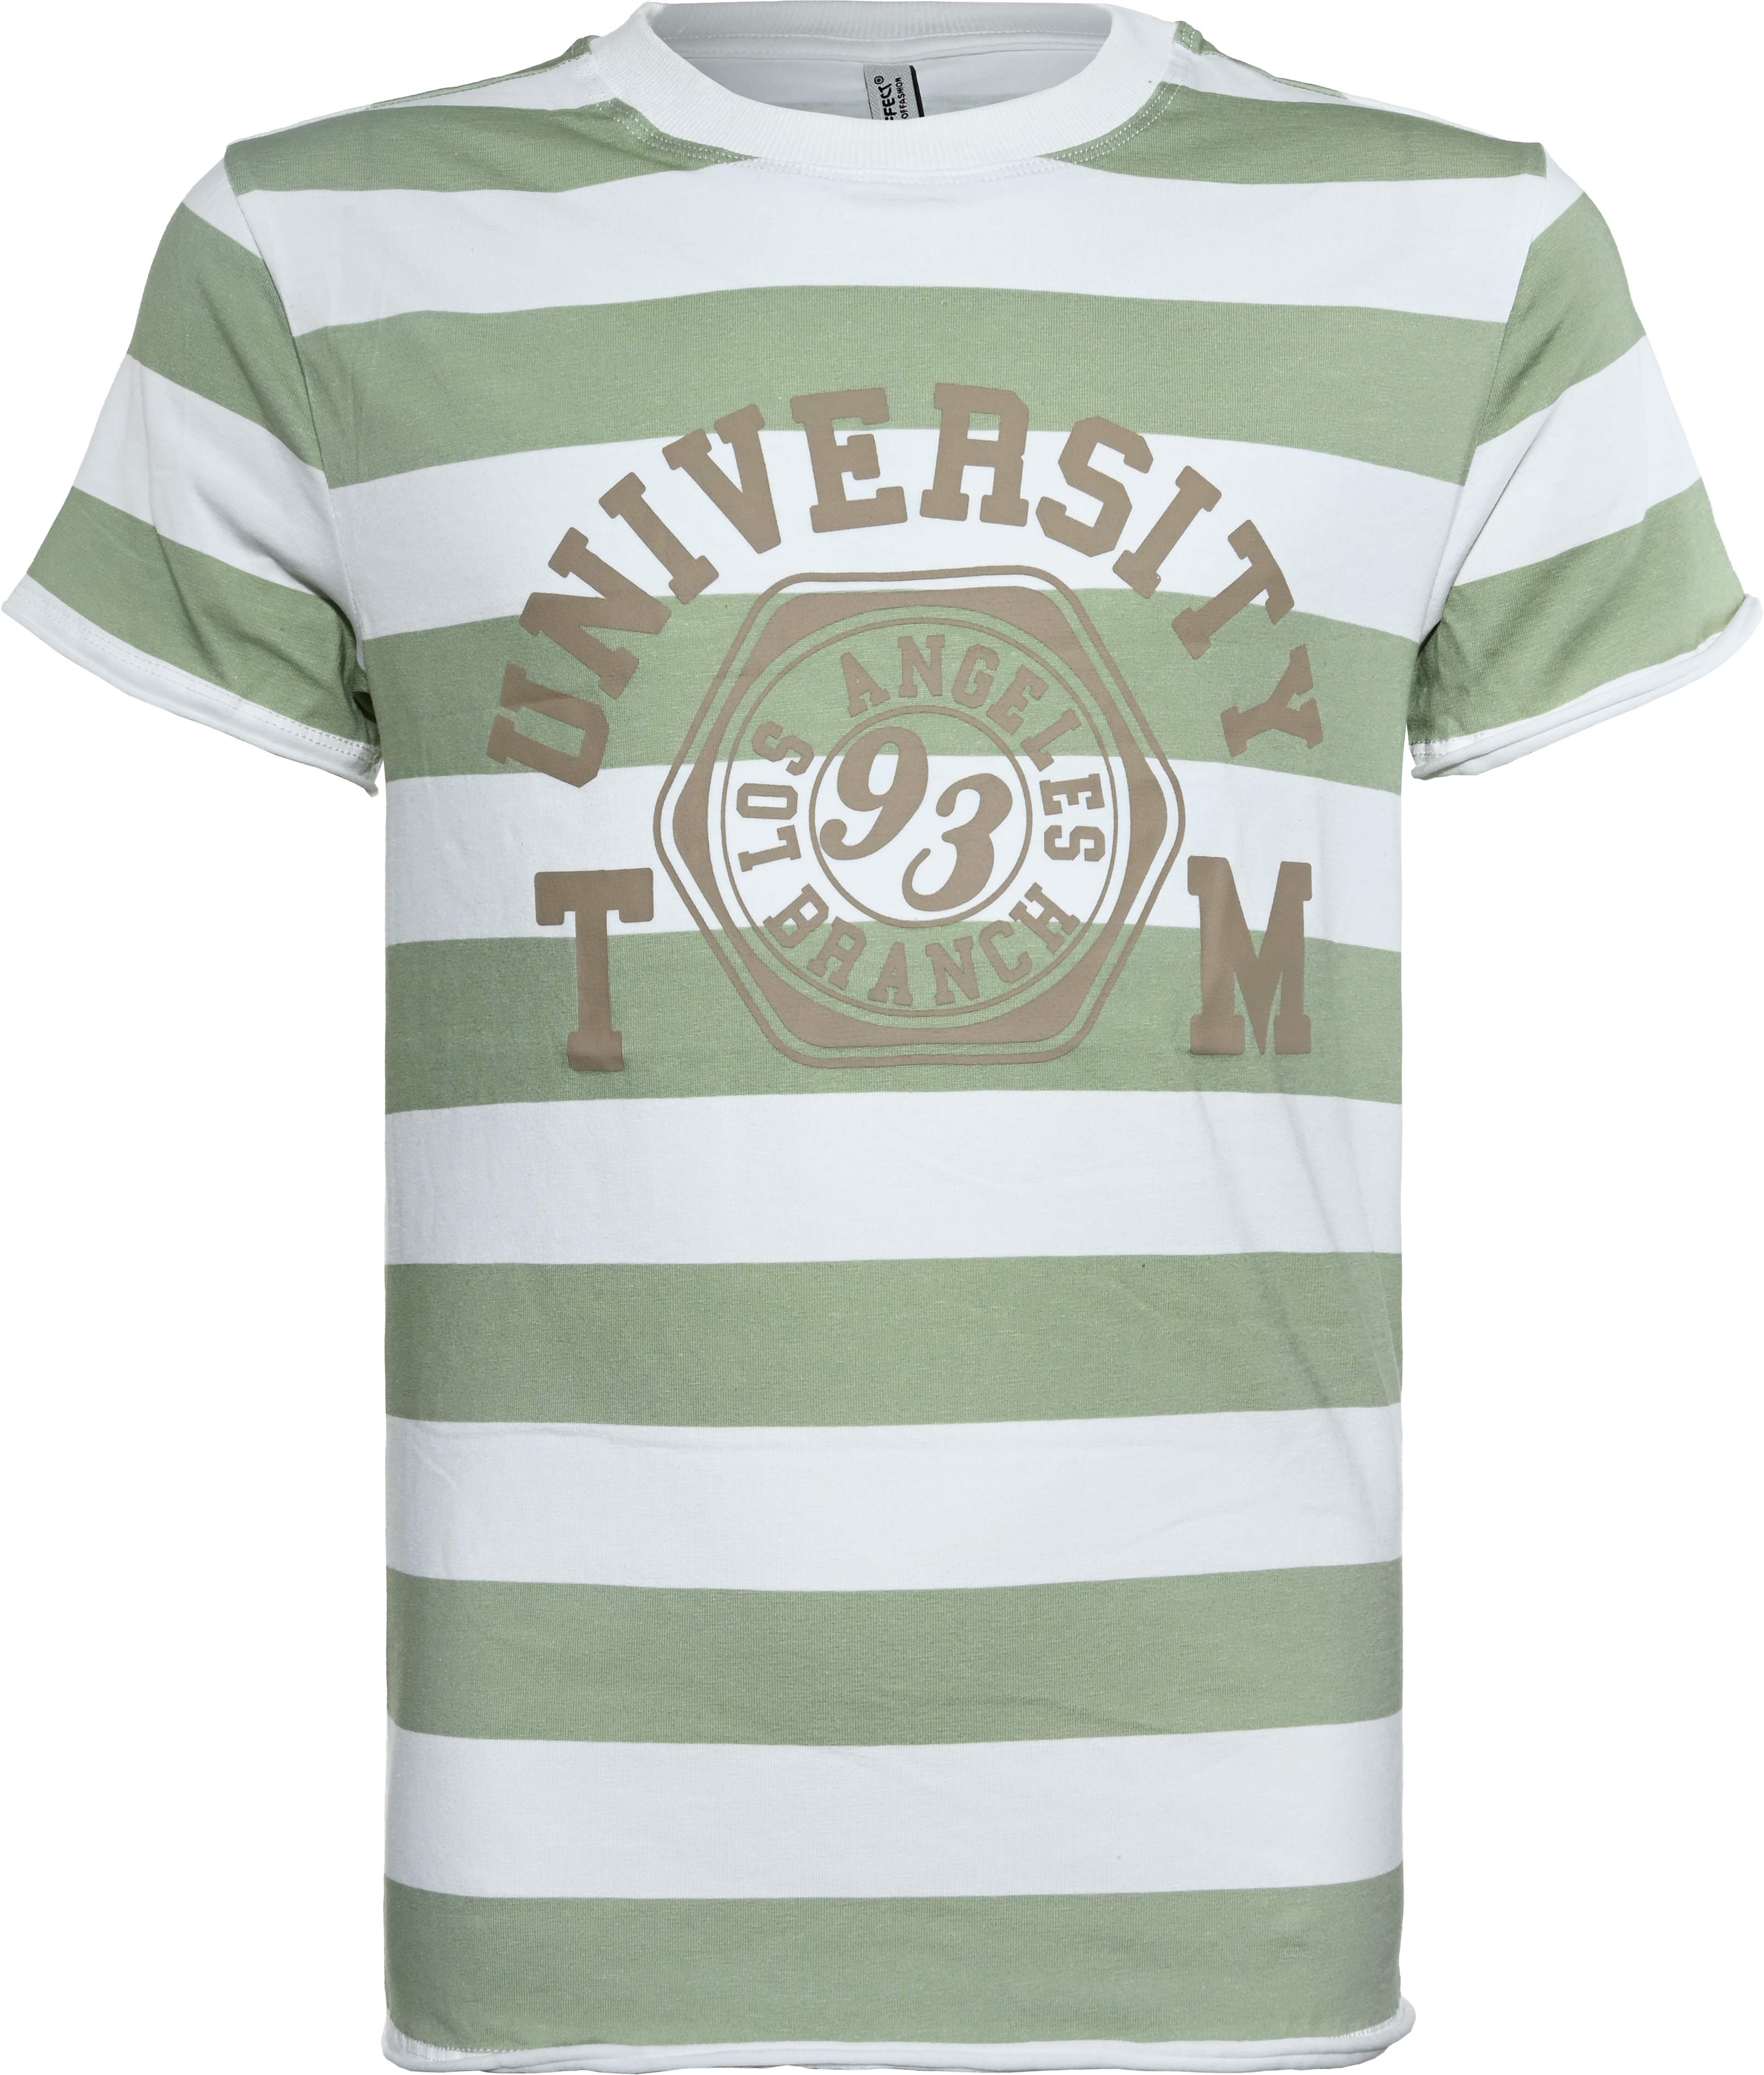 6343-Boys T-Shirt -University